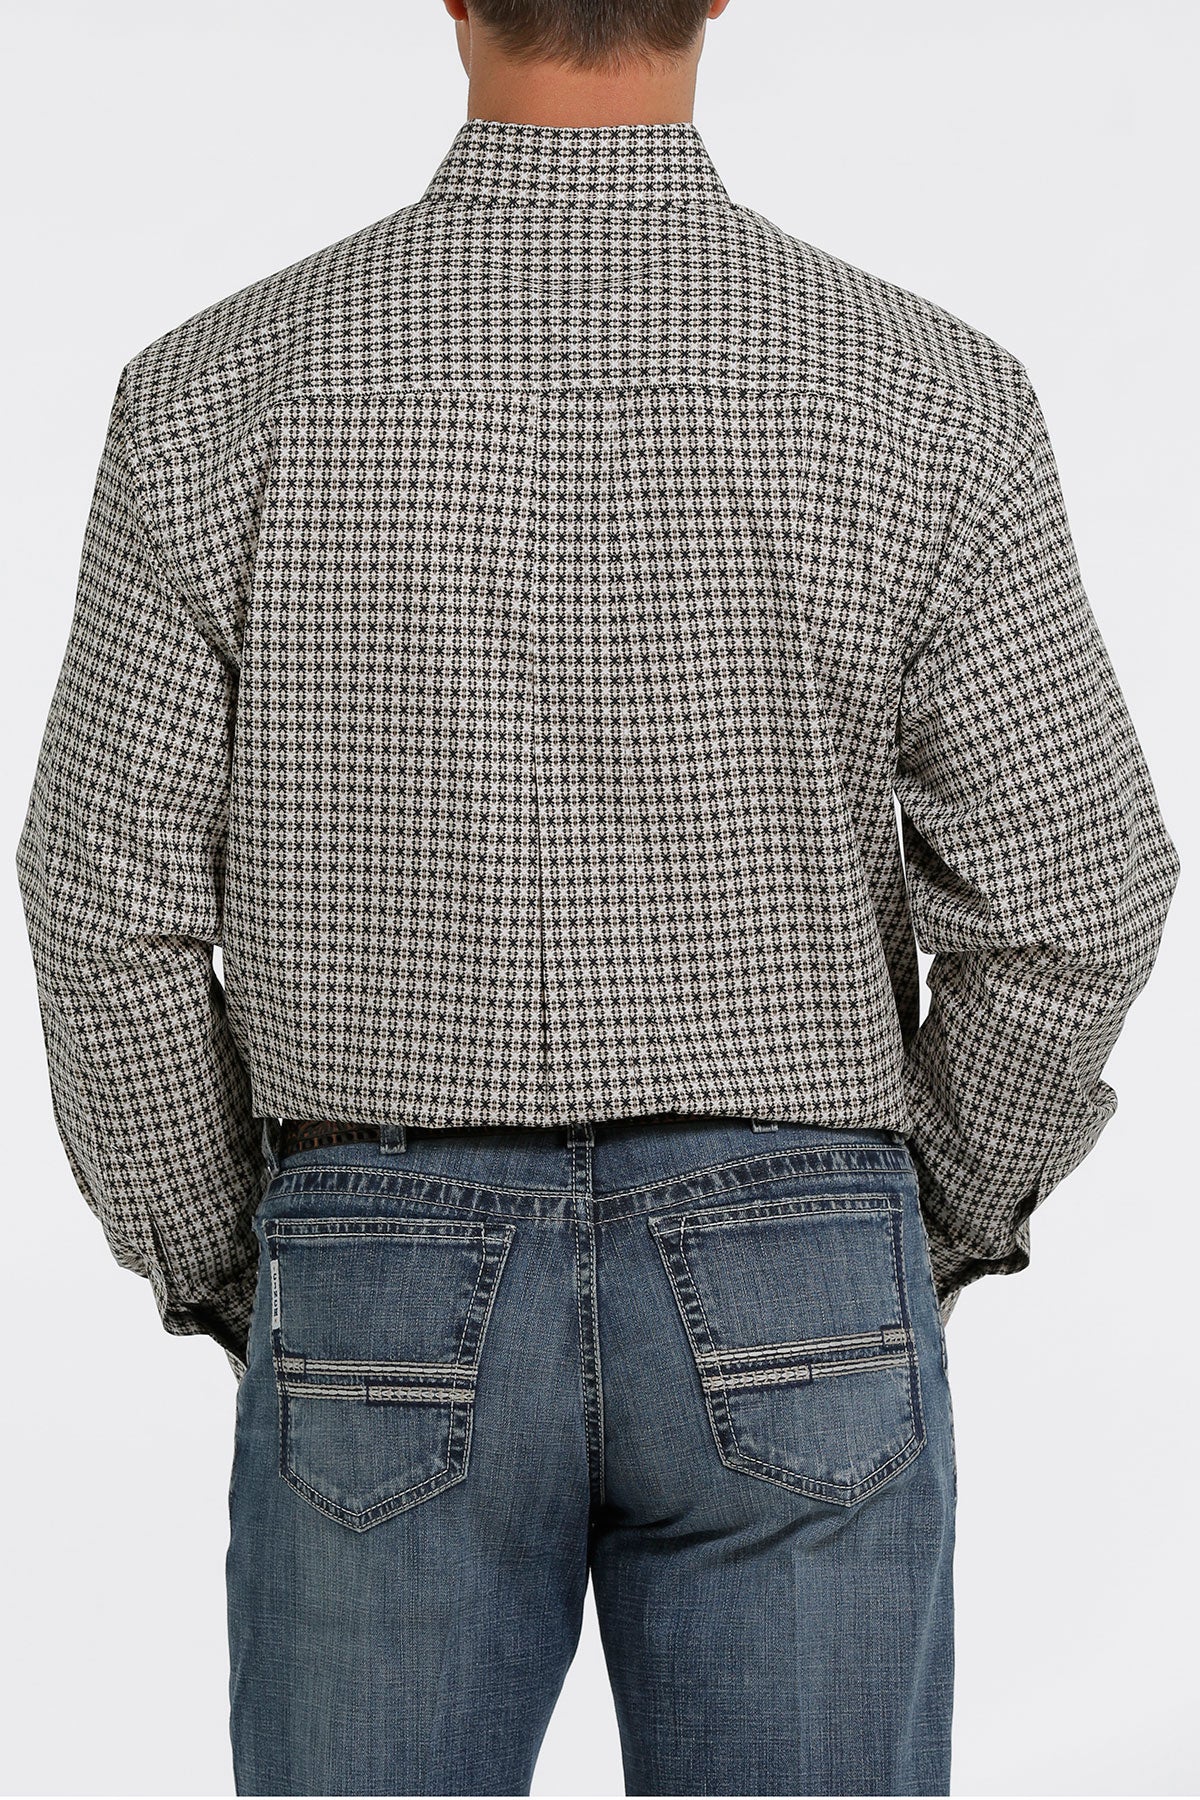 Cinch Khaki Pattern Classic Fit Shirt